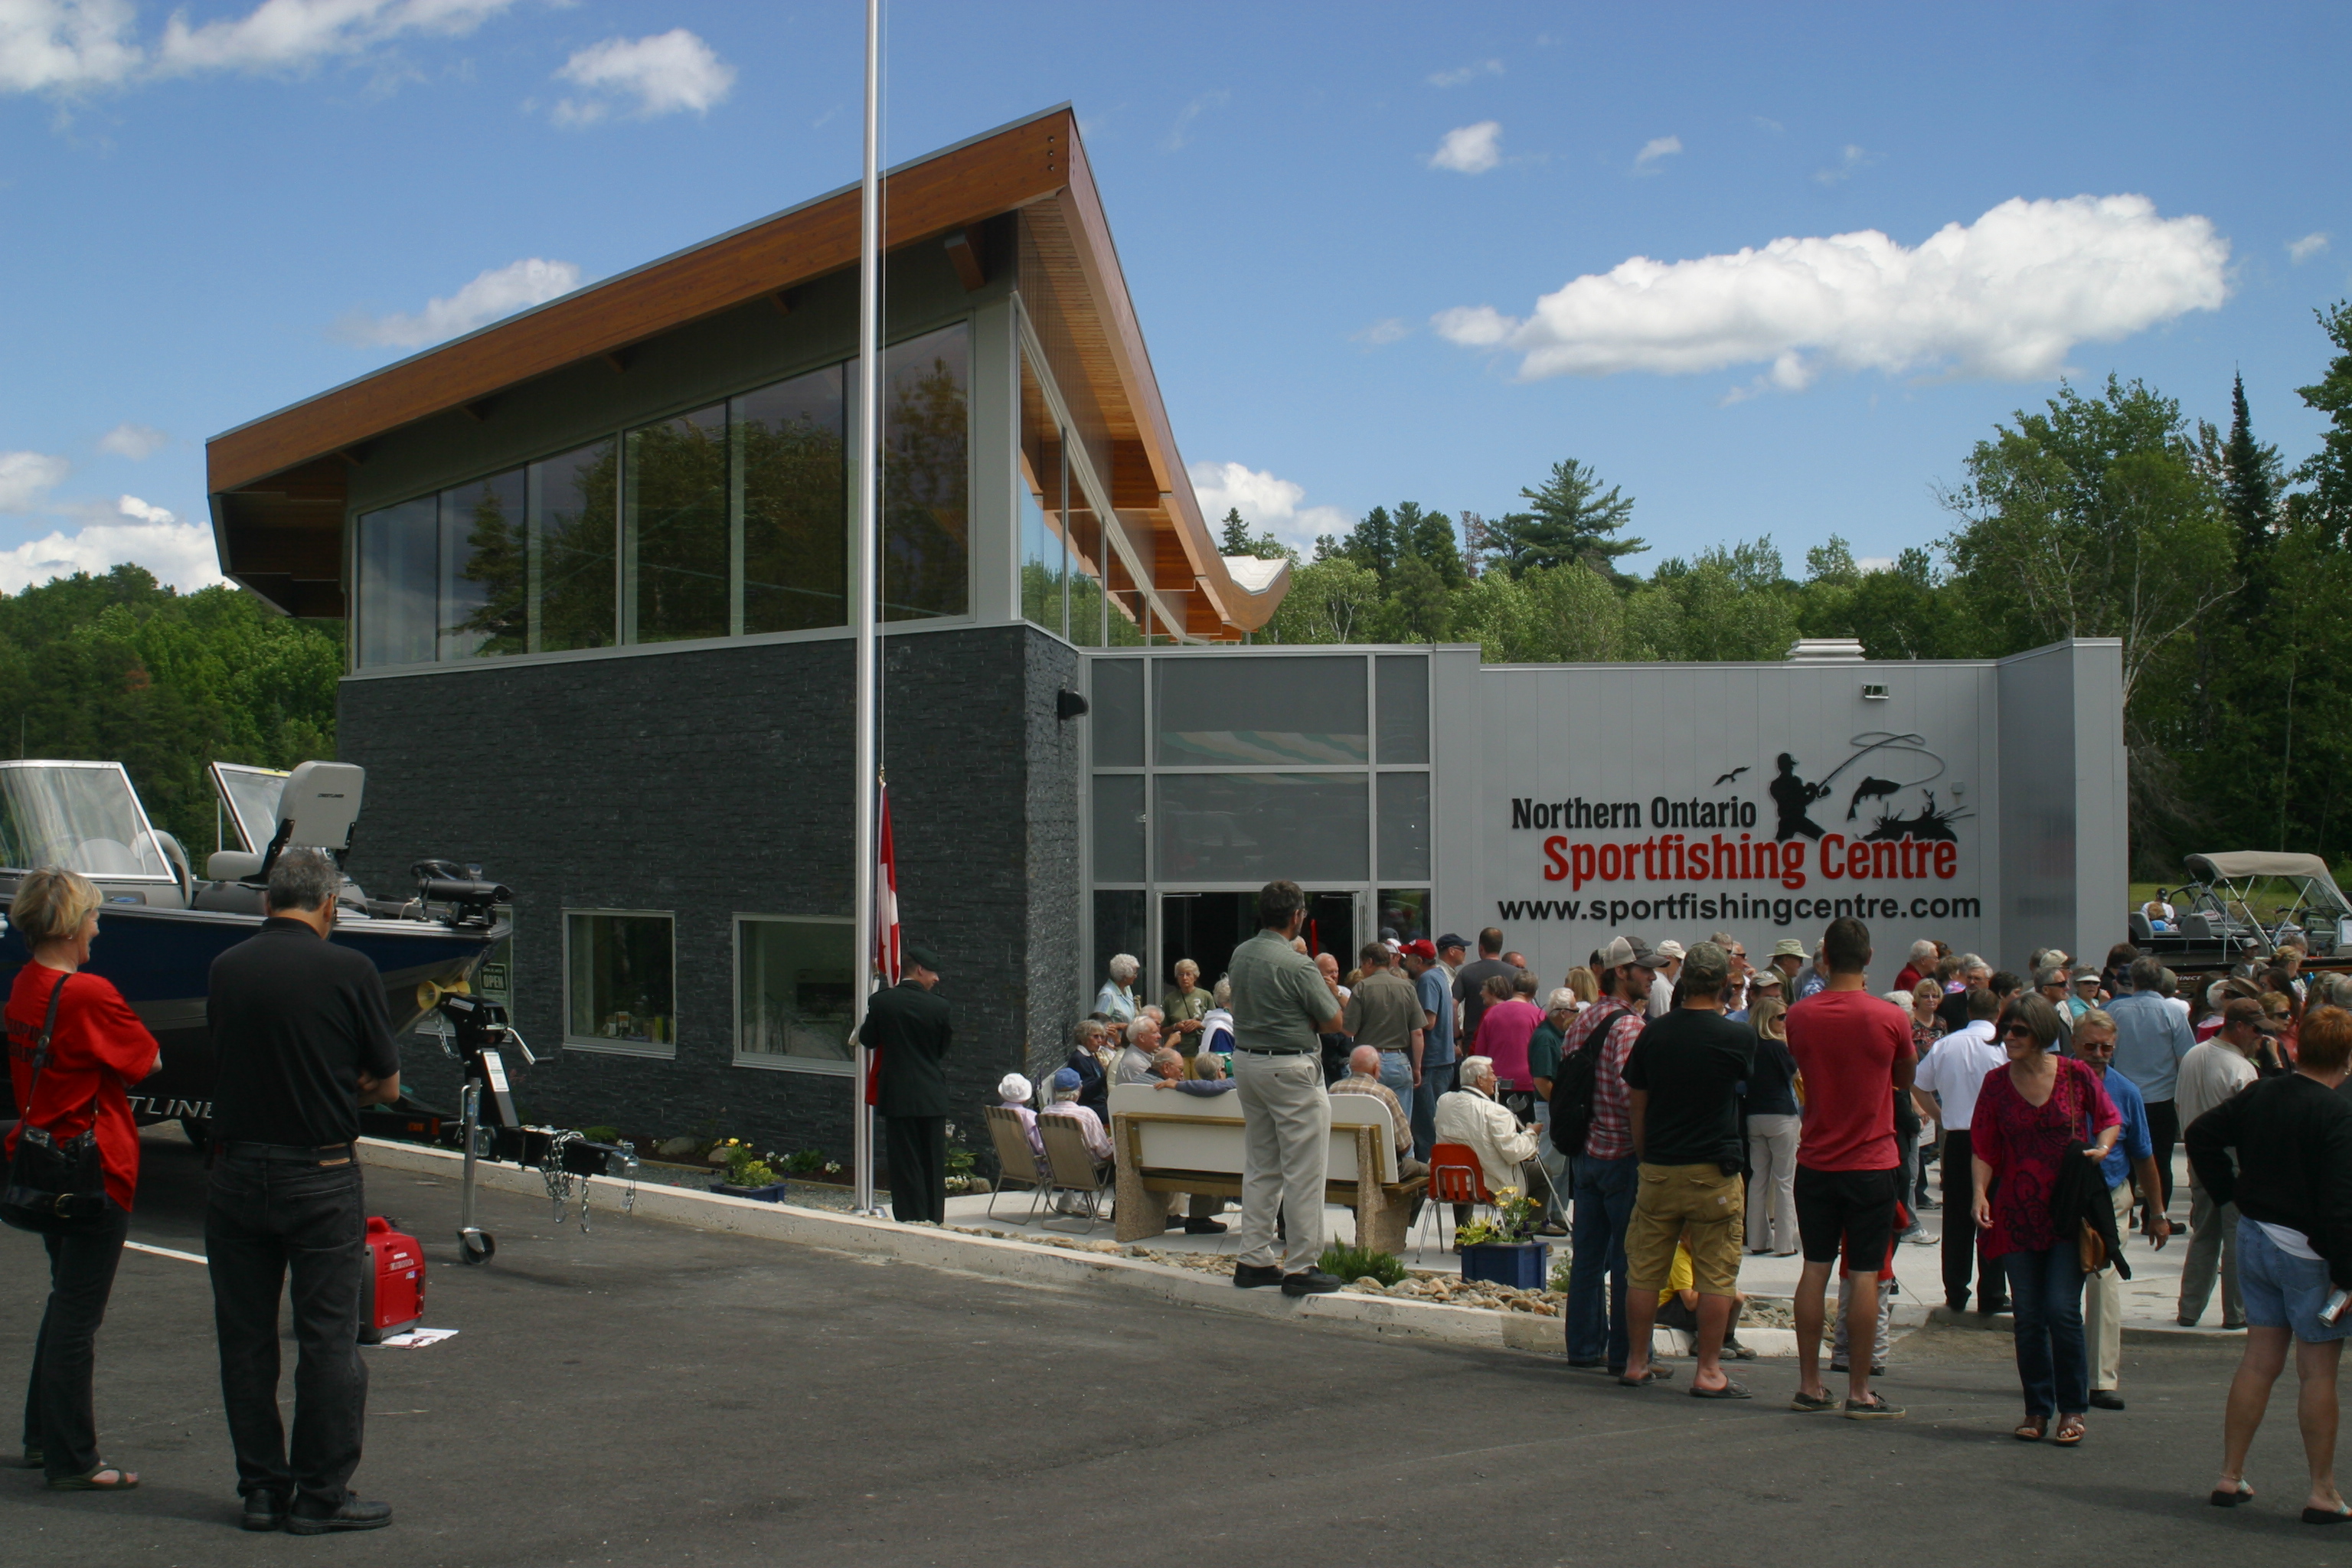 Northern Ontario Sportsfishing Centre